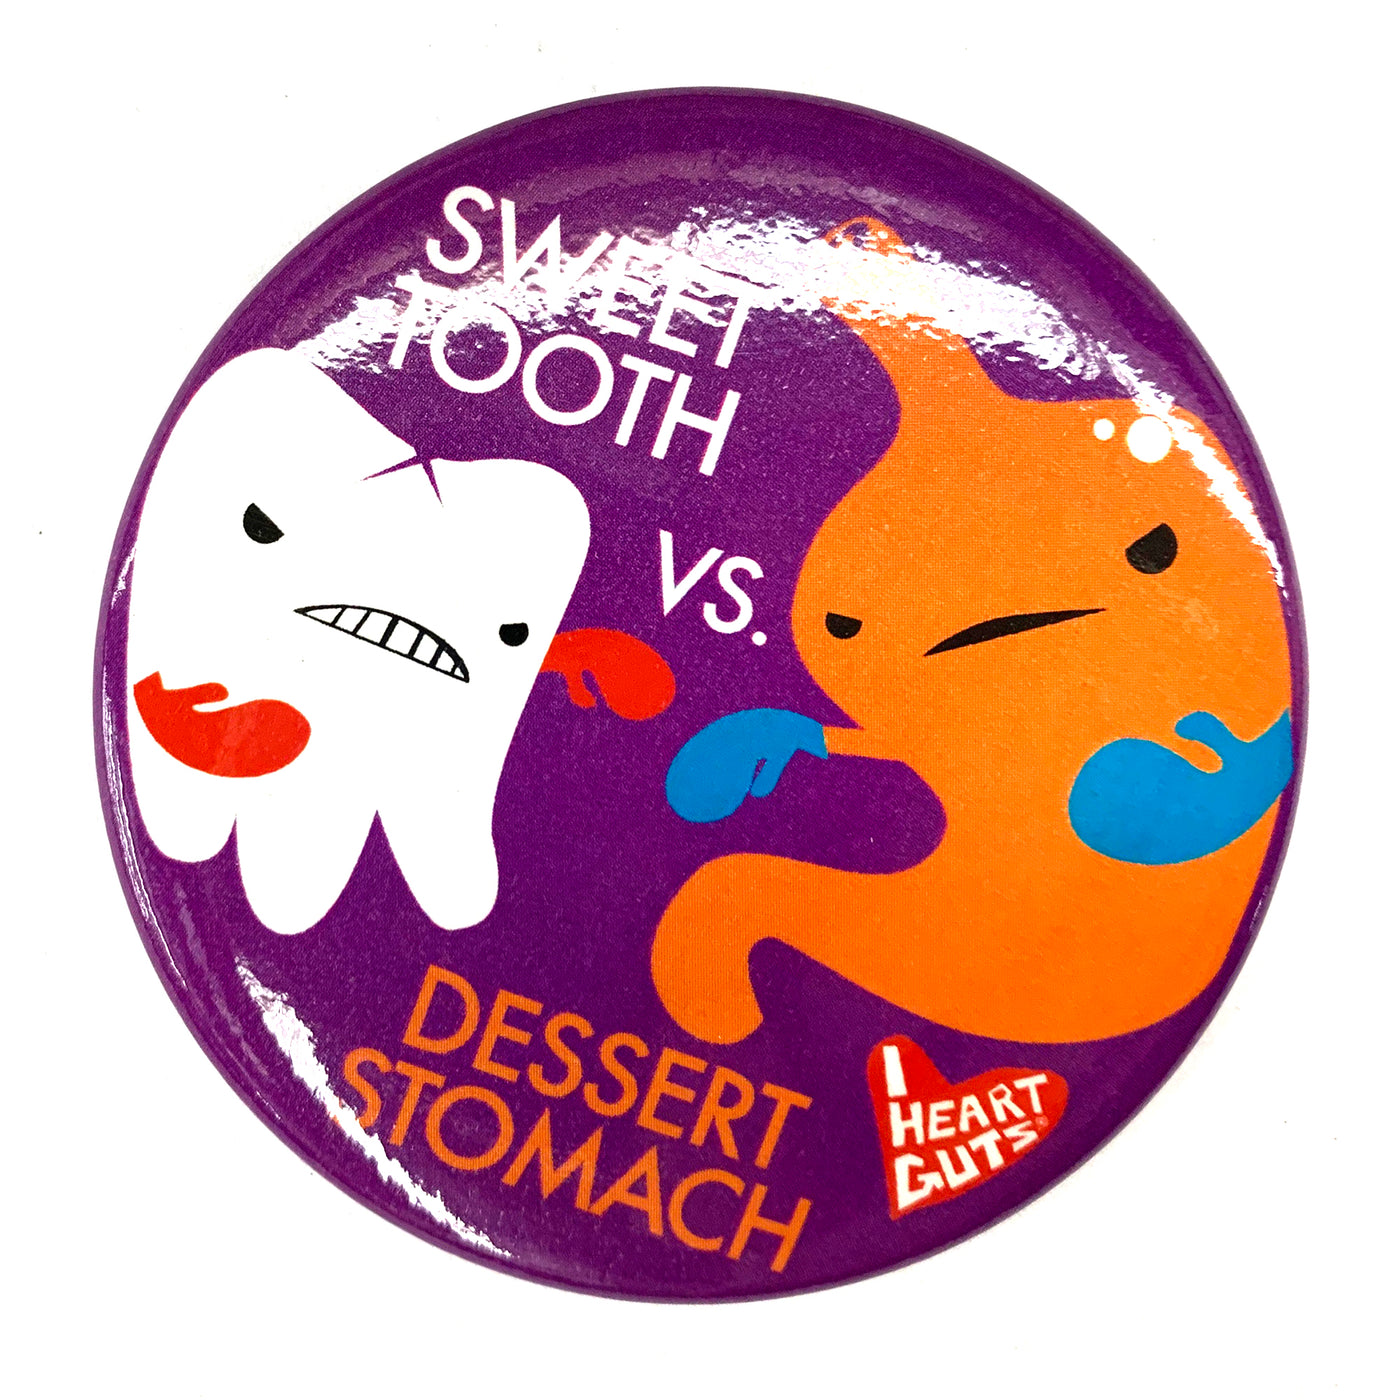 Sweet Tooth vs Dessert Stomach Magnet - I Heart Guts